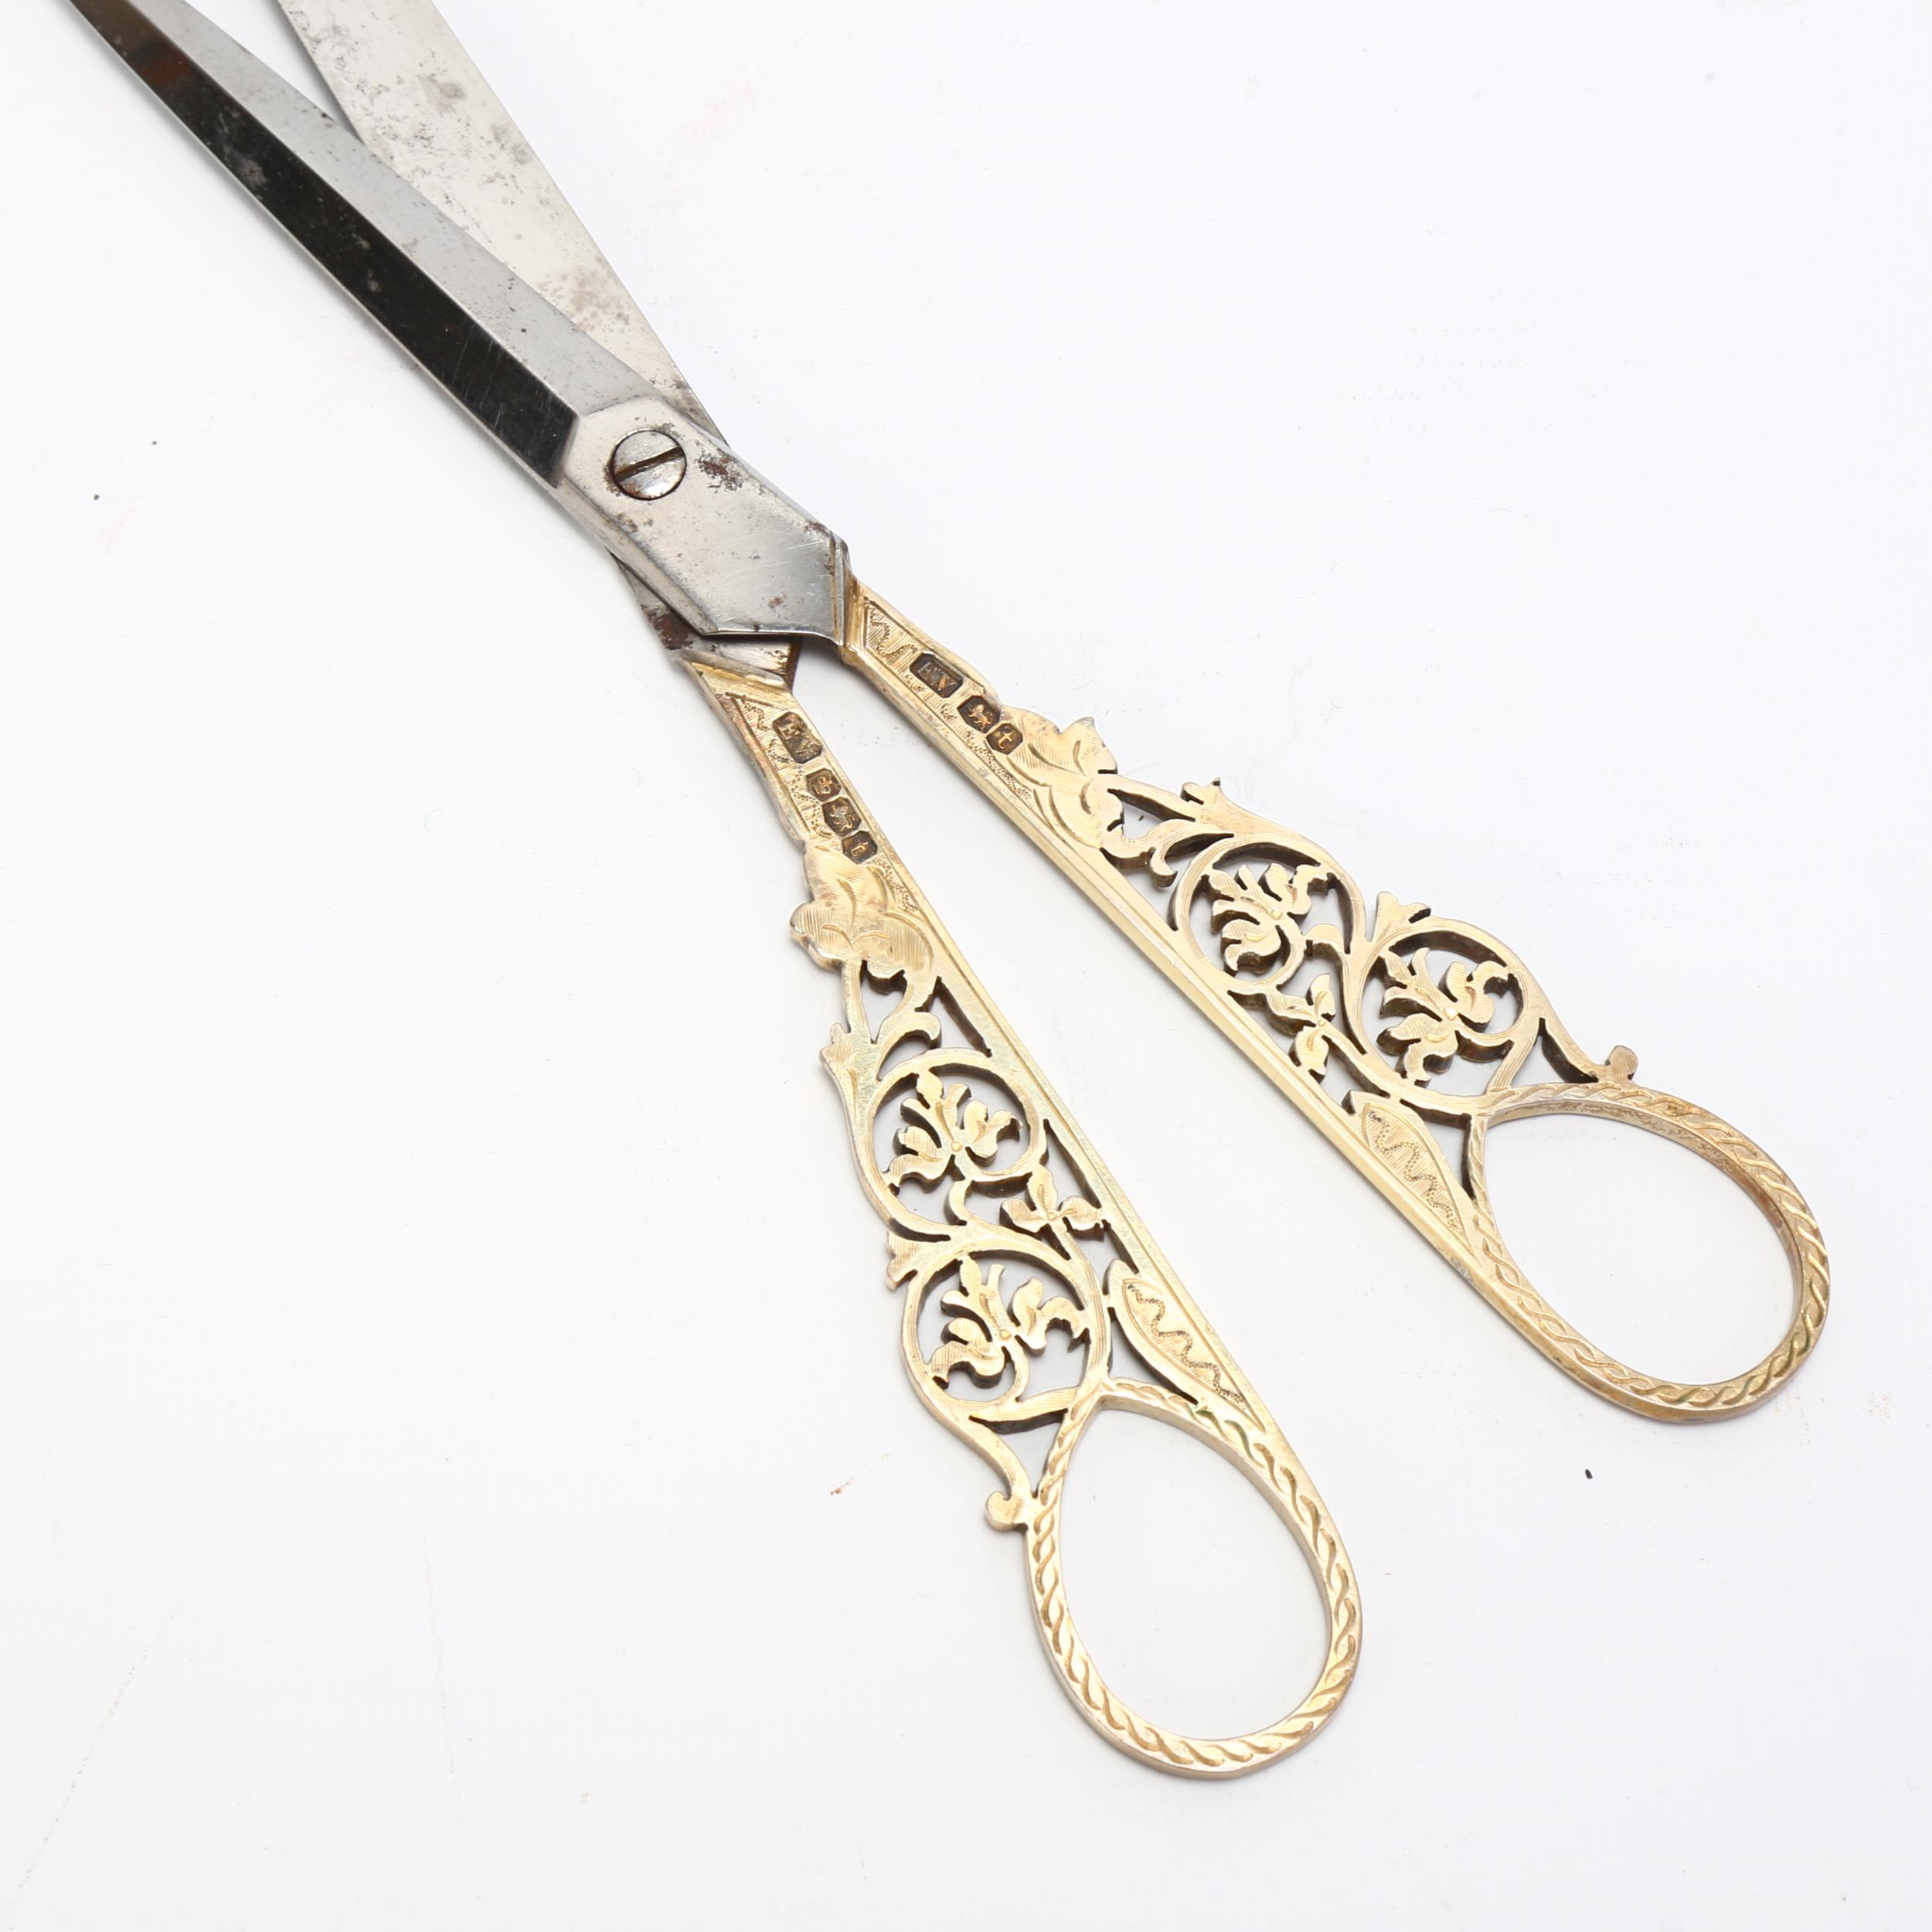 A cased pair of Edward VIII silver-gilt presentation scissors, Viner's Ltd, Sheffield 1936, - Image 2 of 3